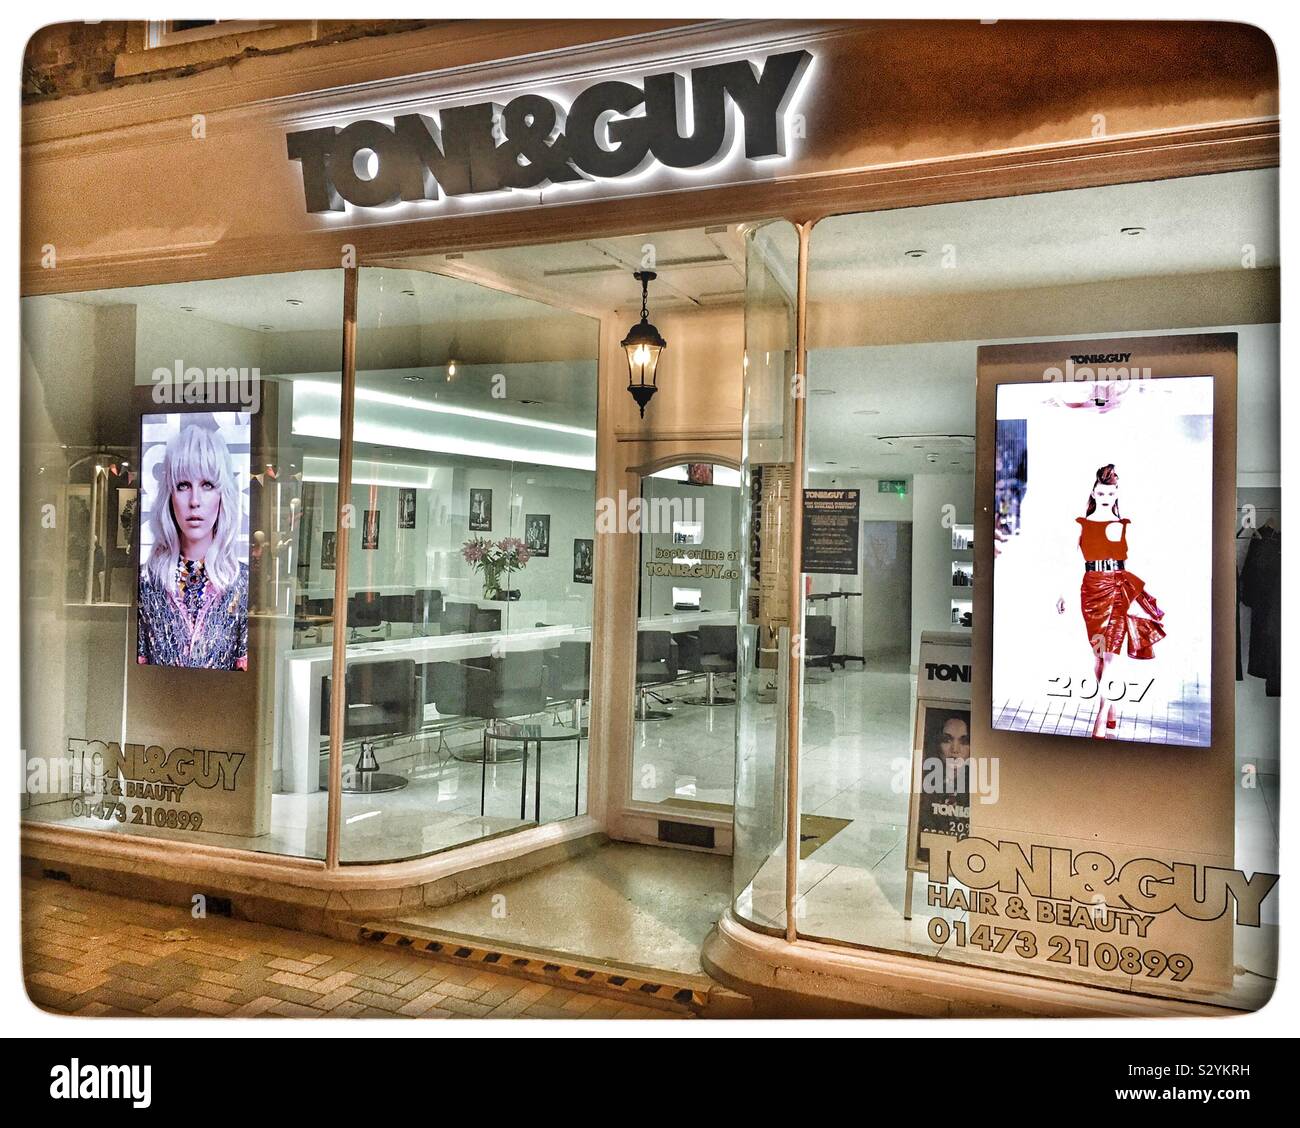 Toni&Guy hair salon Stock Photo - Alamy